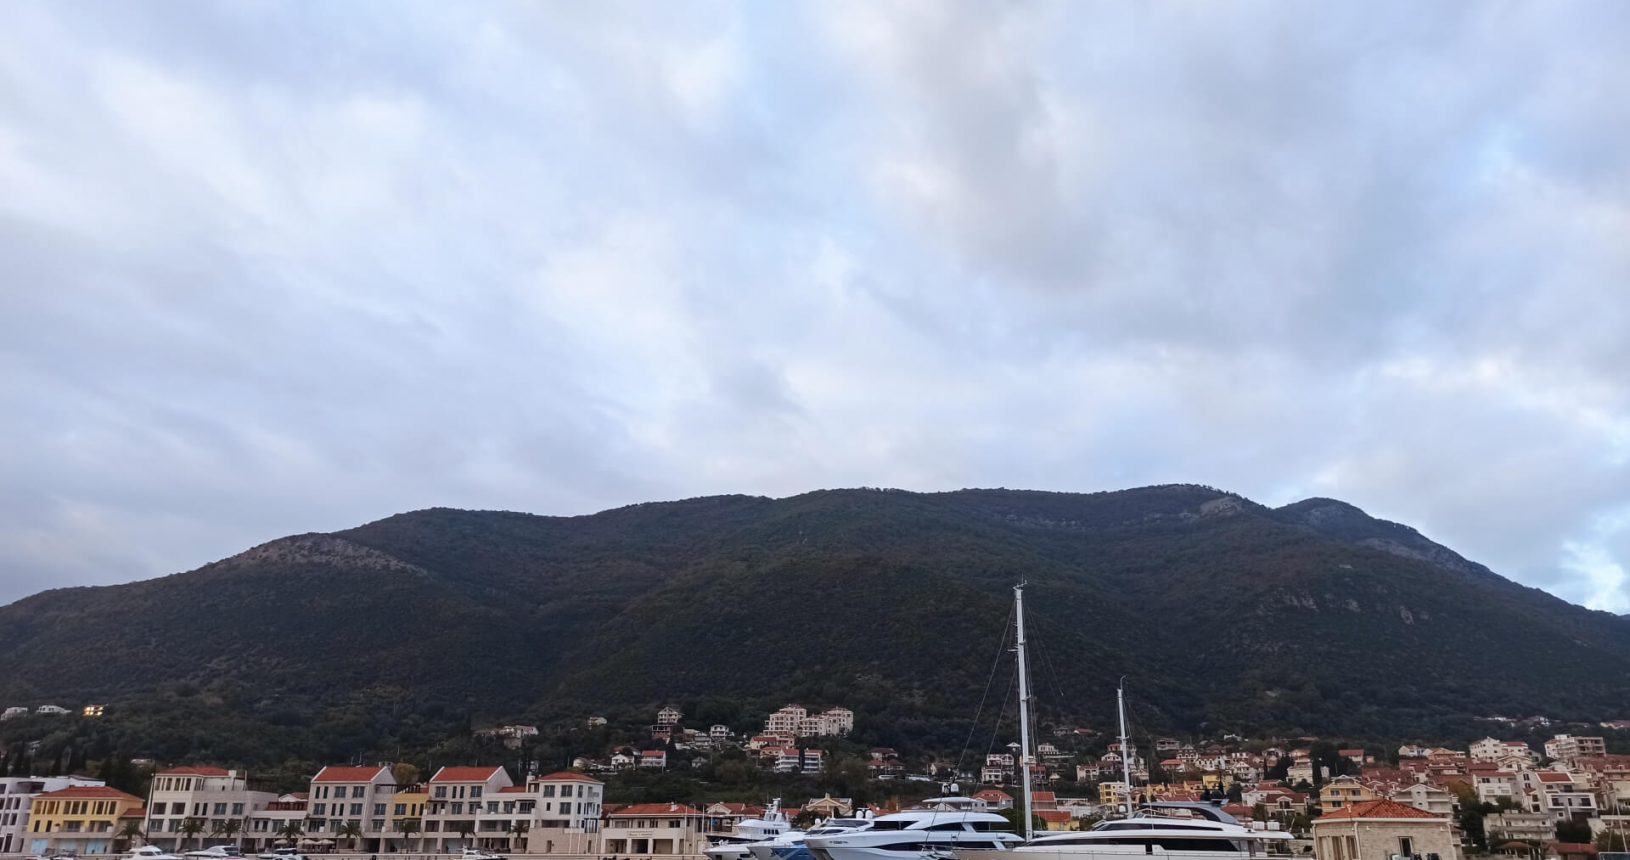 Portonovi mountains and yachts sea view